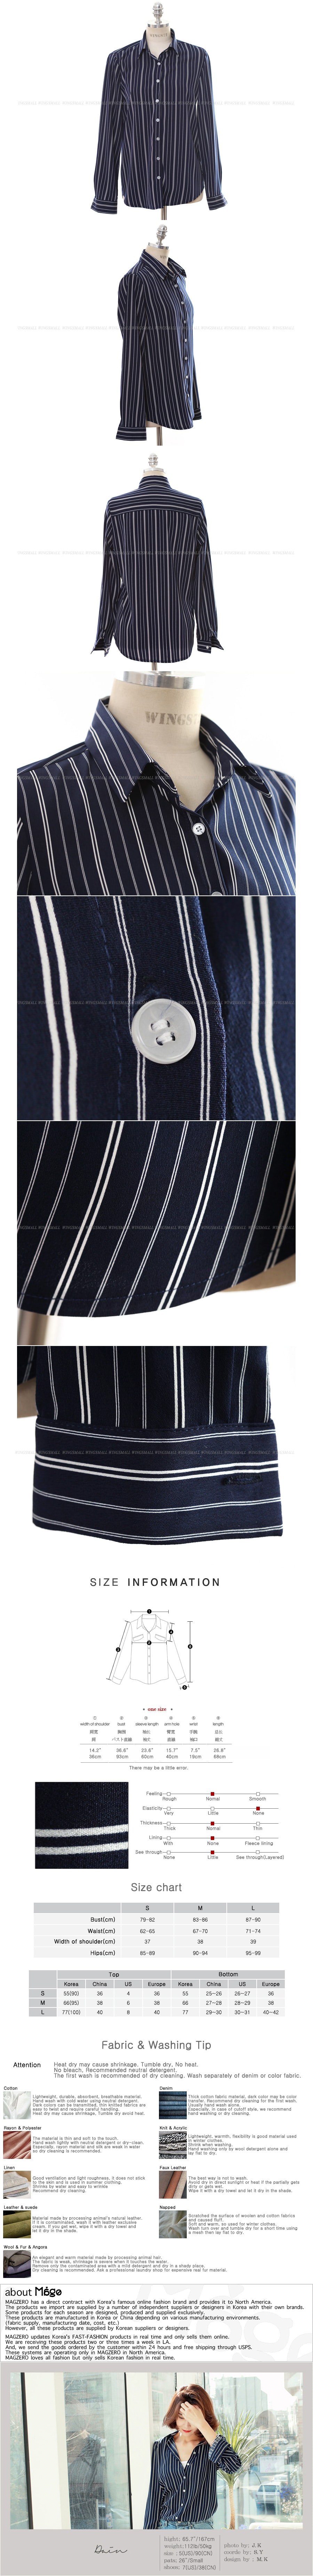 KOREA Striped Button Blouse Shirt #Navy One Size(S-M) [Free Shipping]